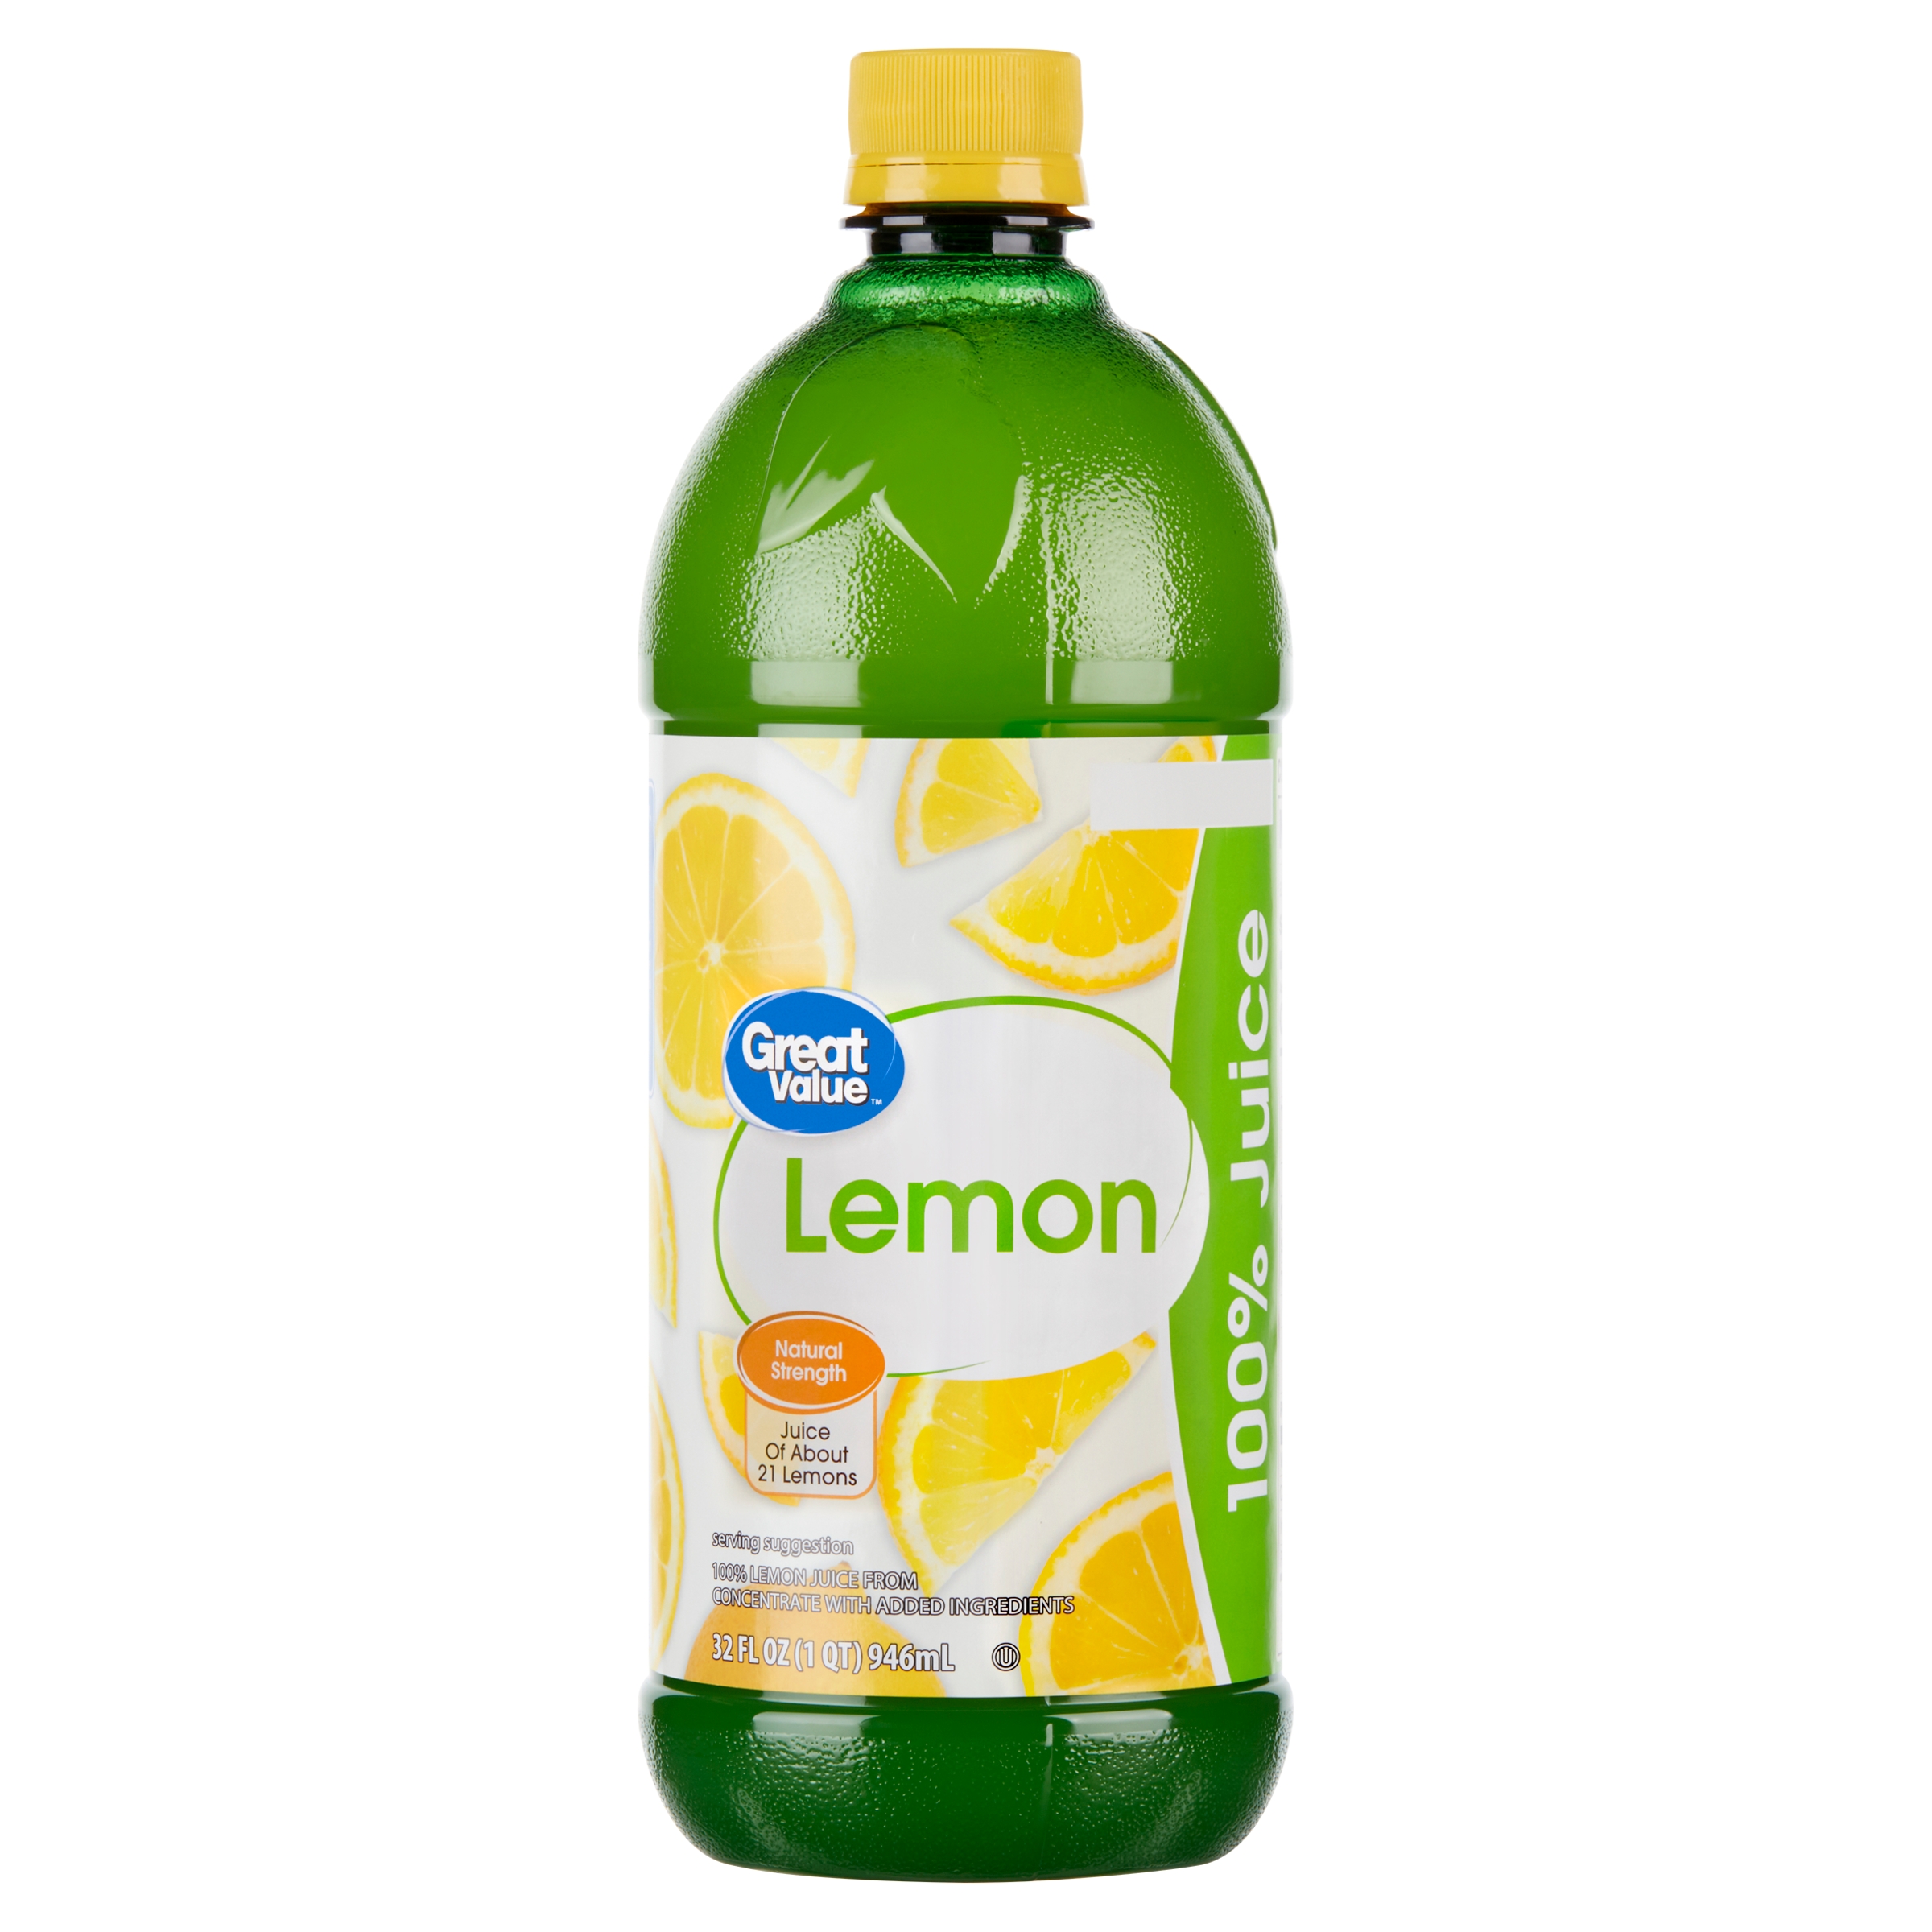 Great Value Lemon 100% Juice, 32 fl oz - image 1 of 9